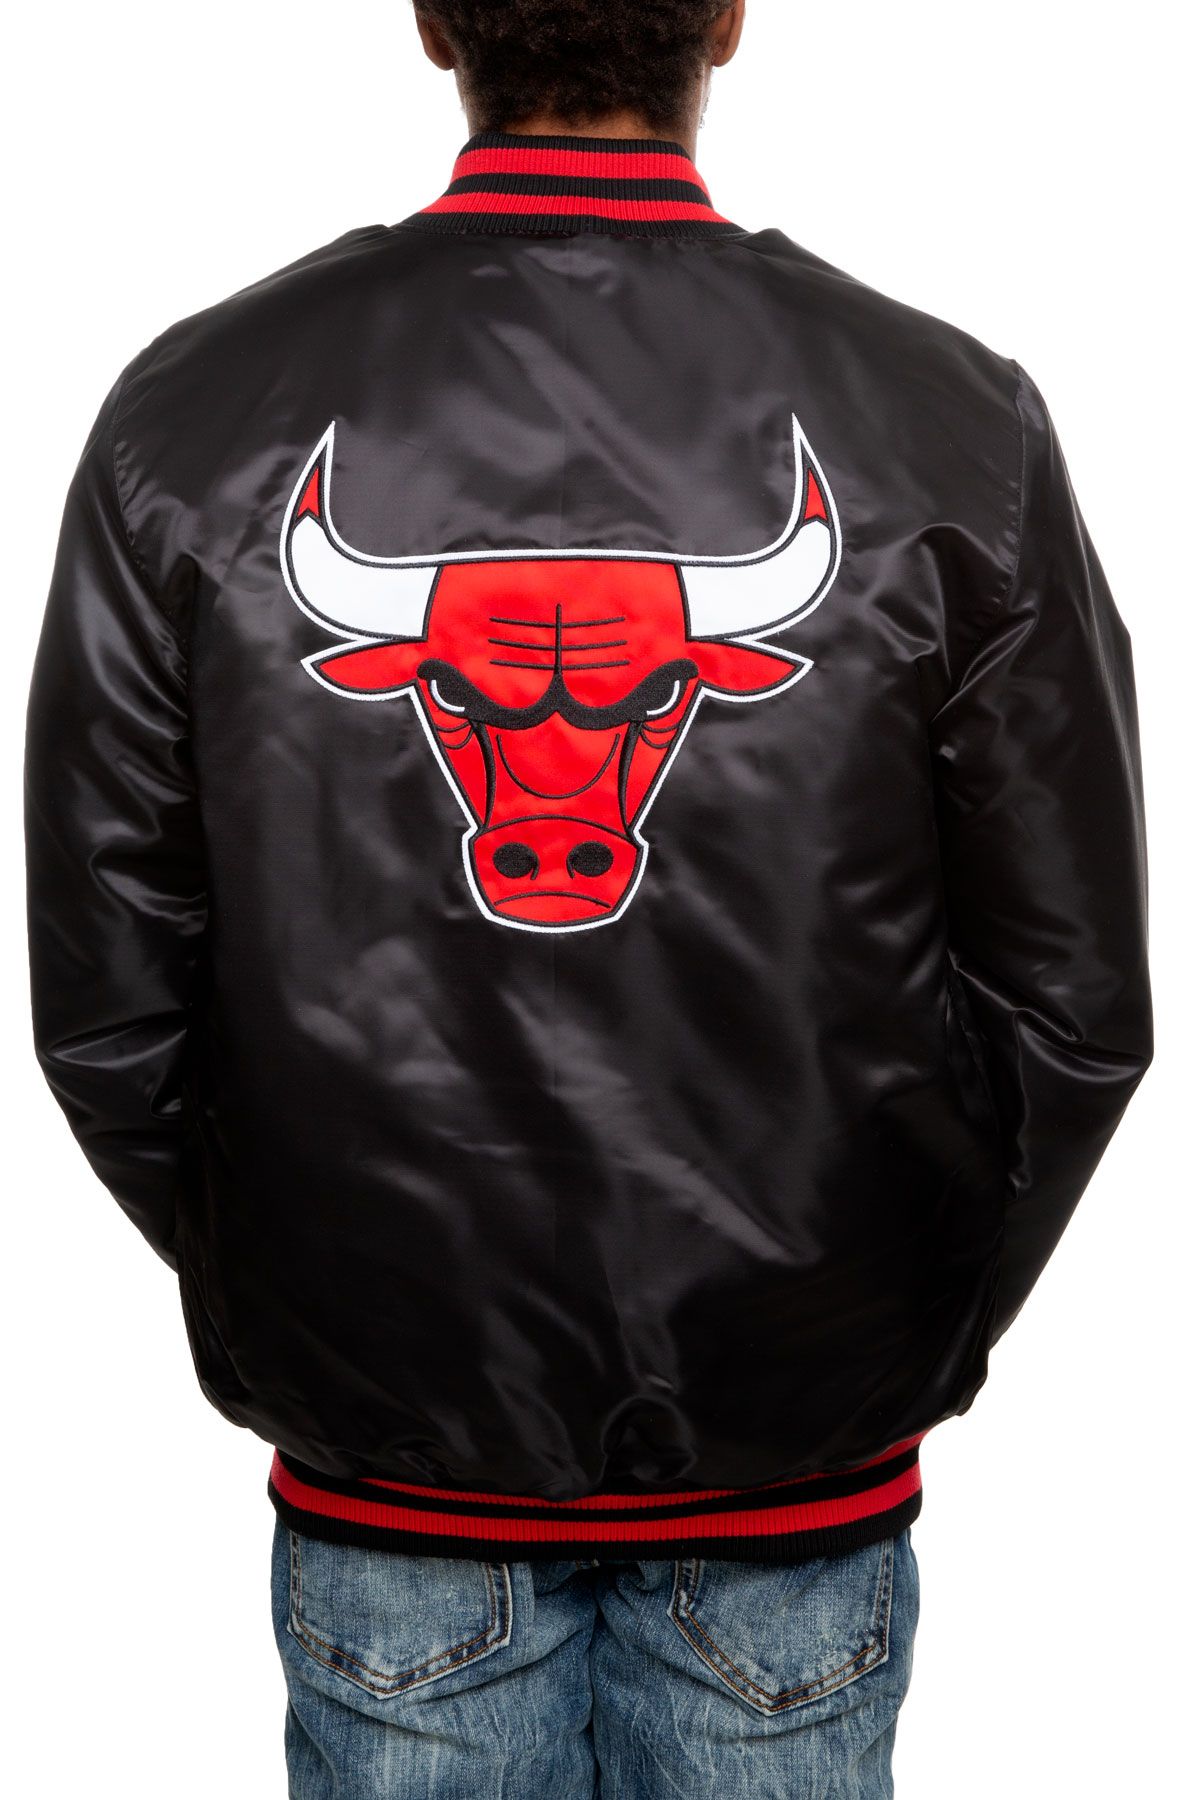 Bulls Starter Jacket Vintage : Vintage 90s Era Chicago Bulls Starter ...